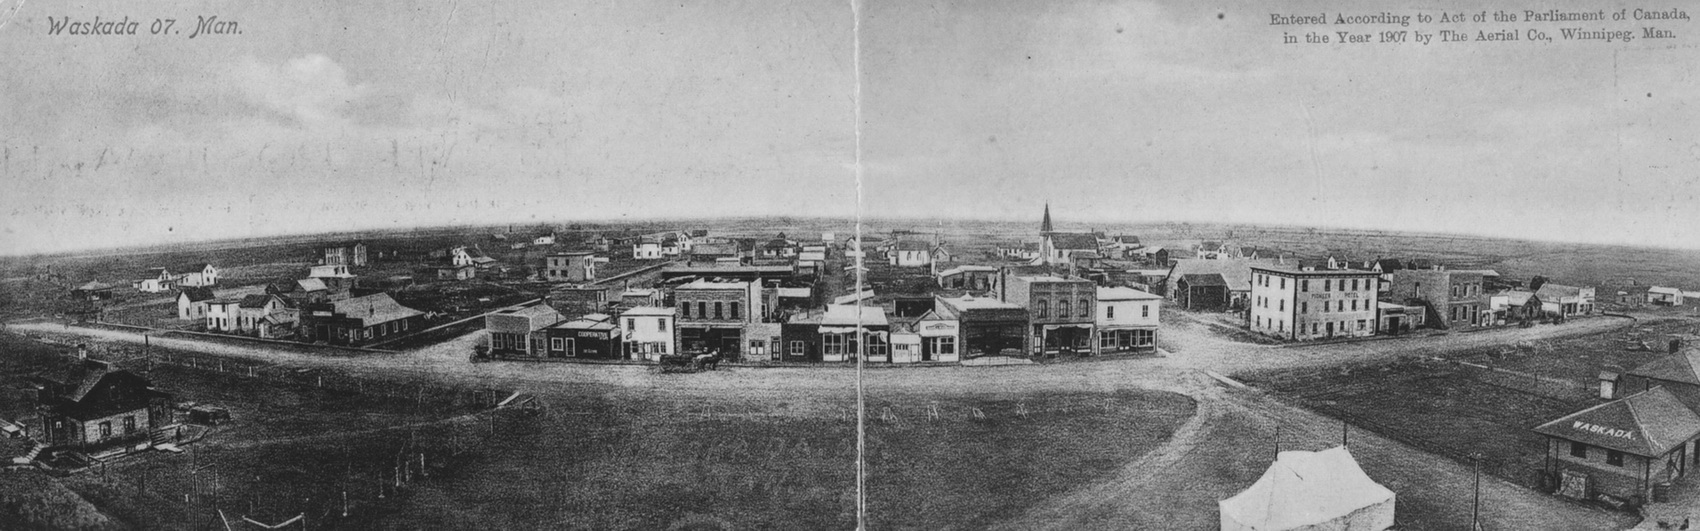 Waskada Manitoba 1907